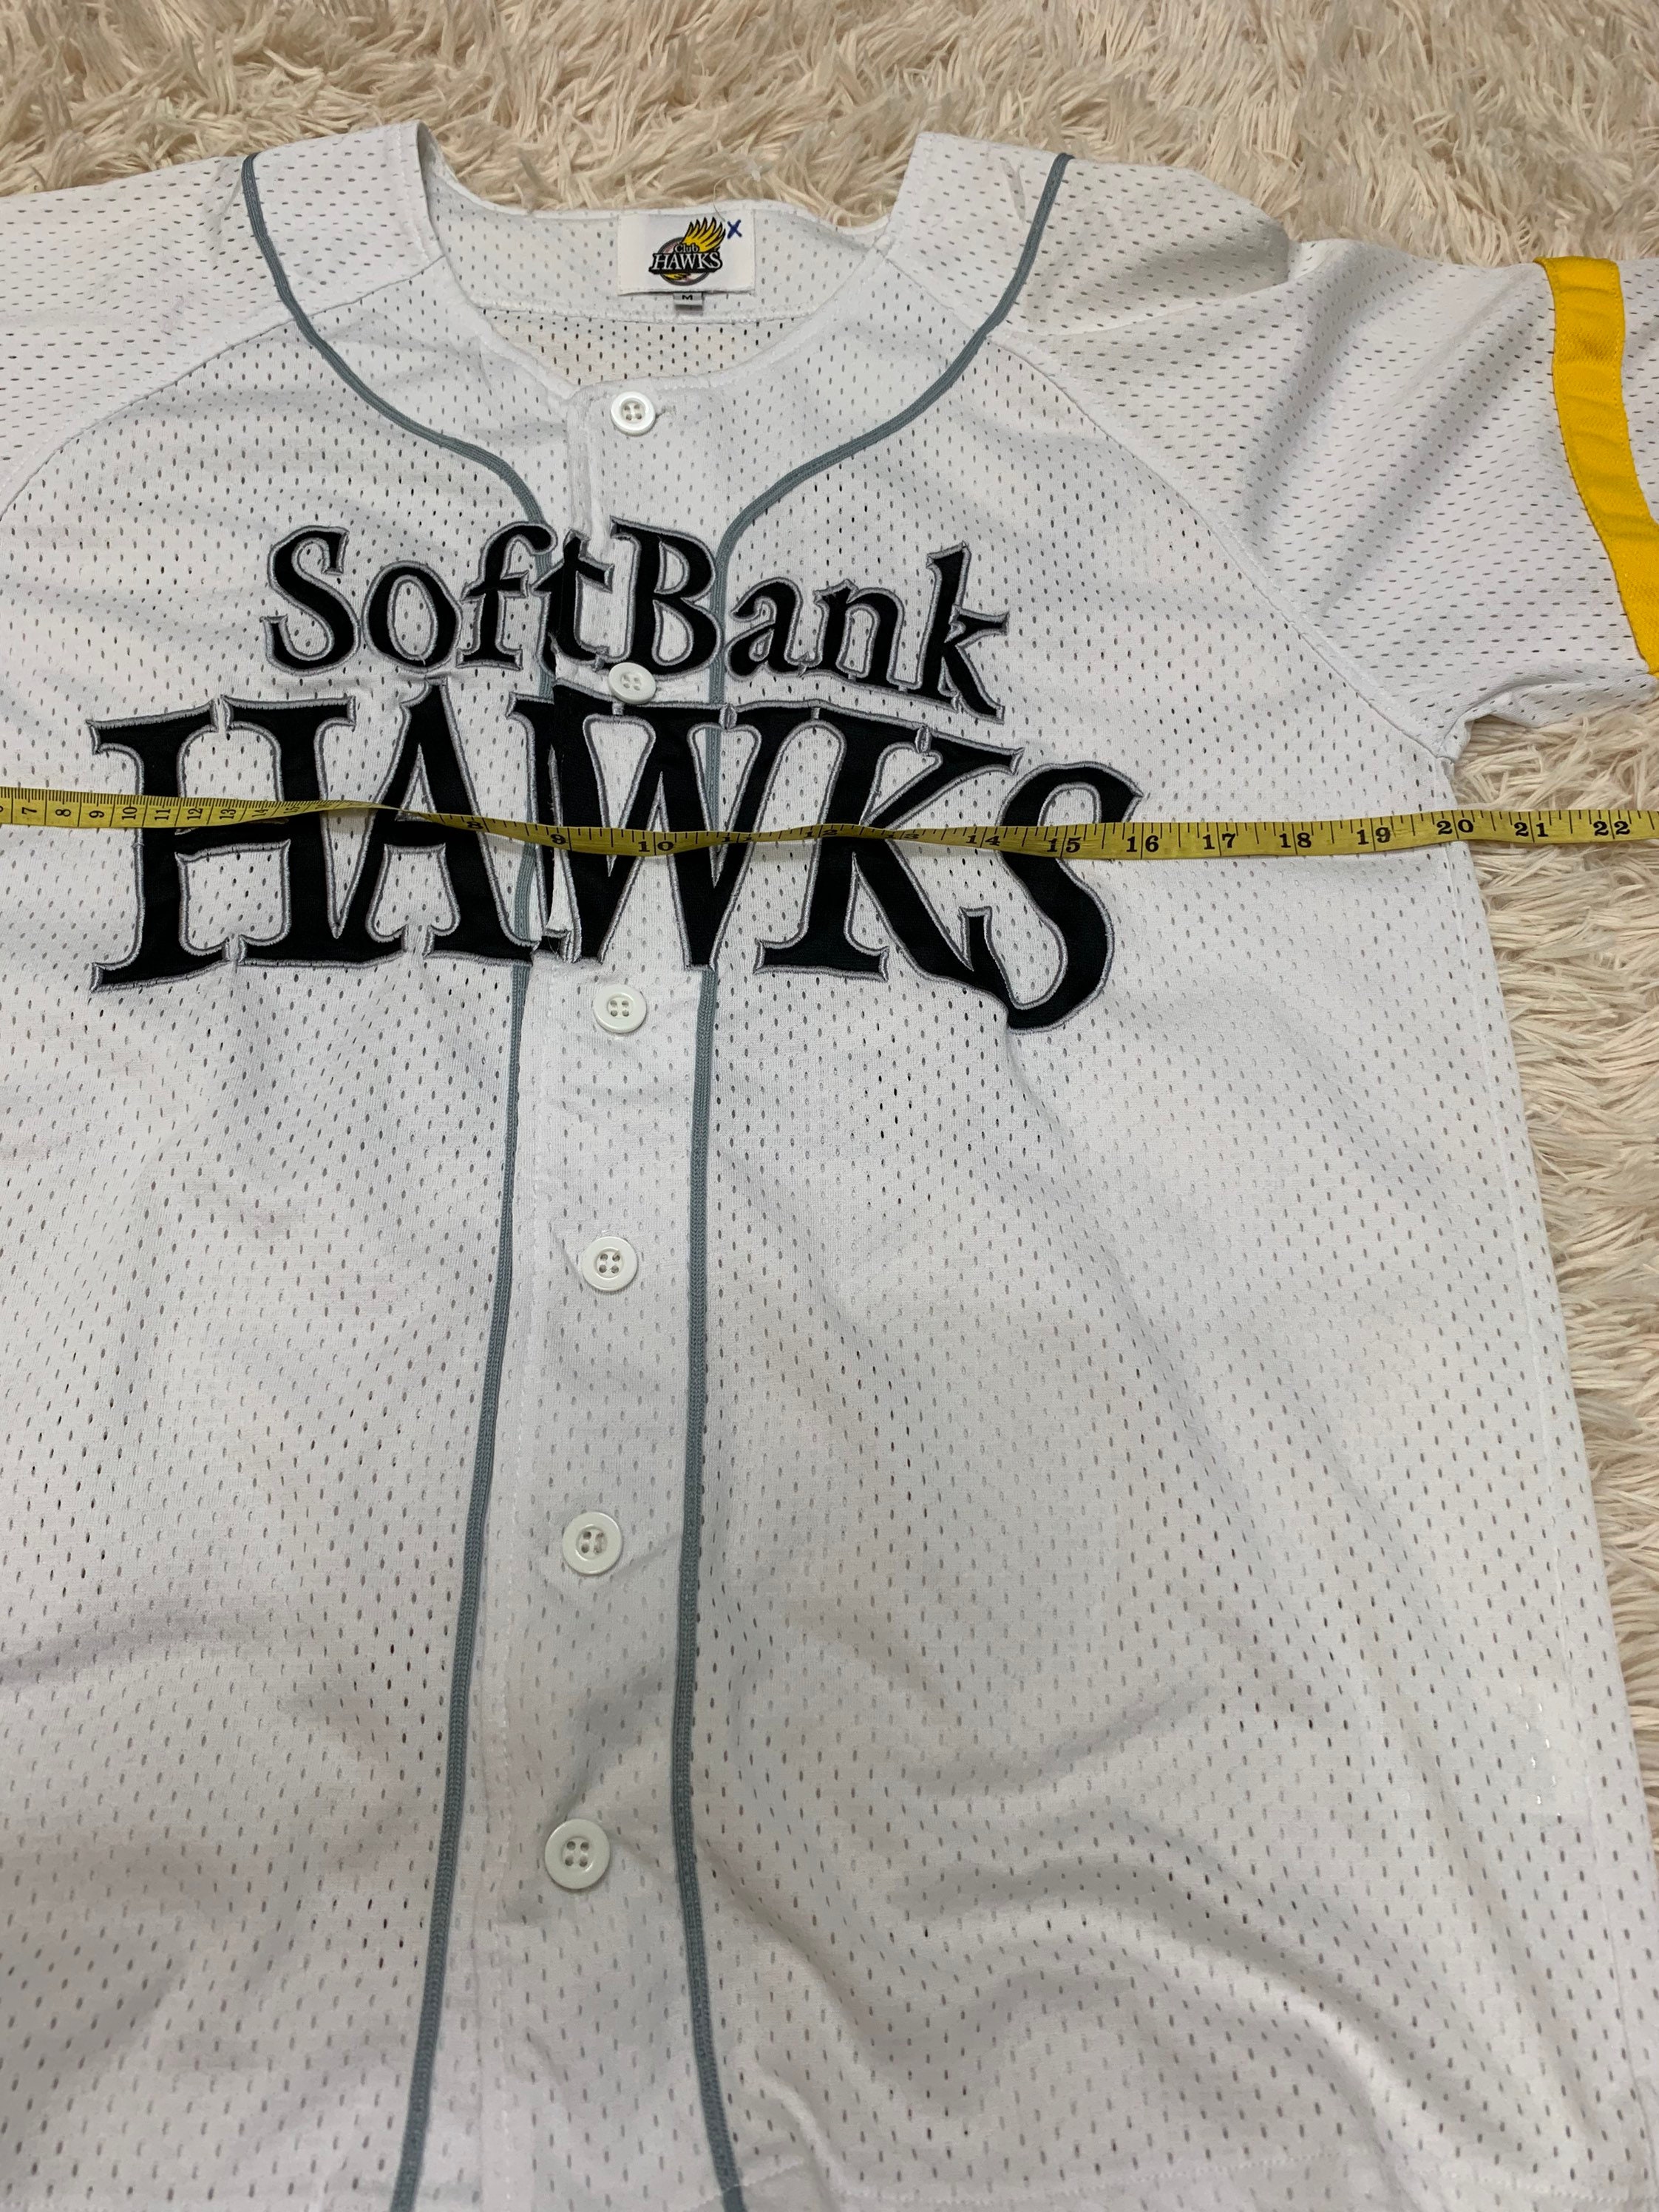 Softbank Hawks Baseball Jersey K. Saitoh 